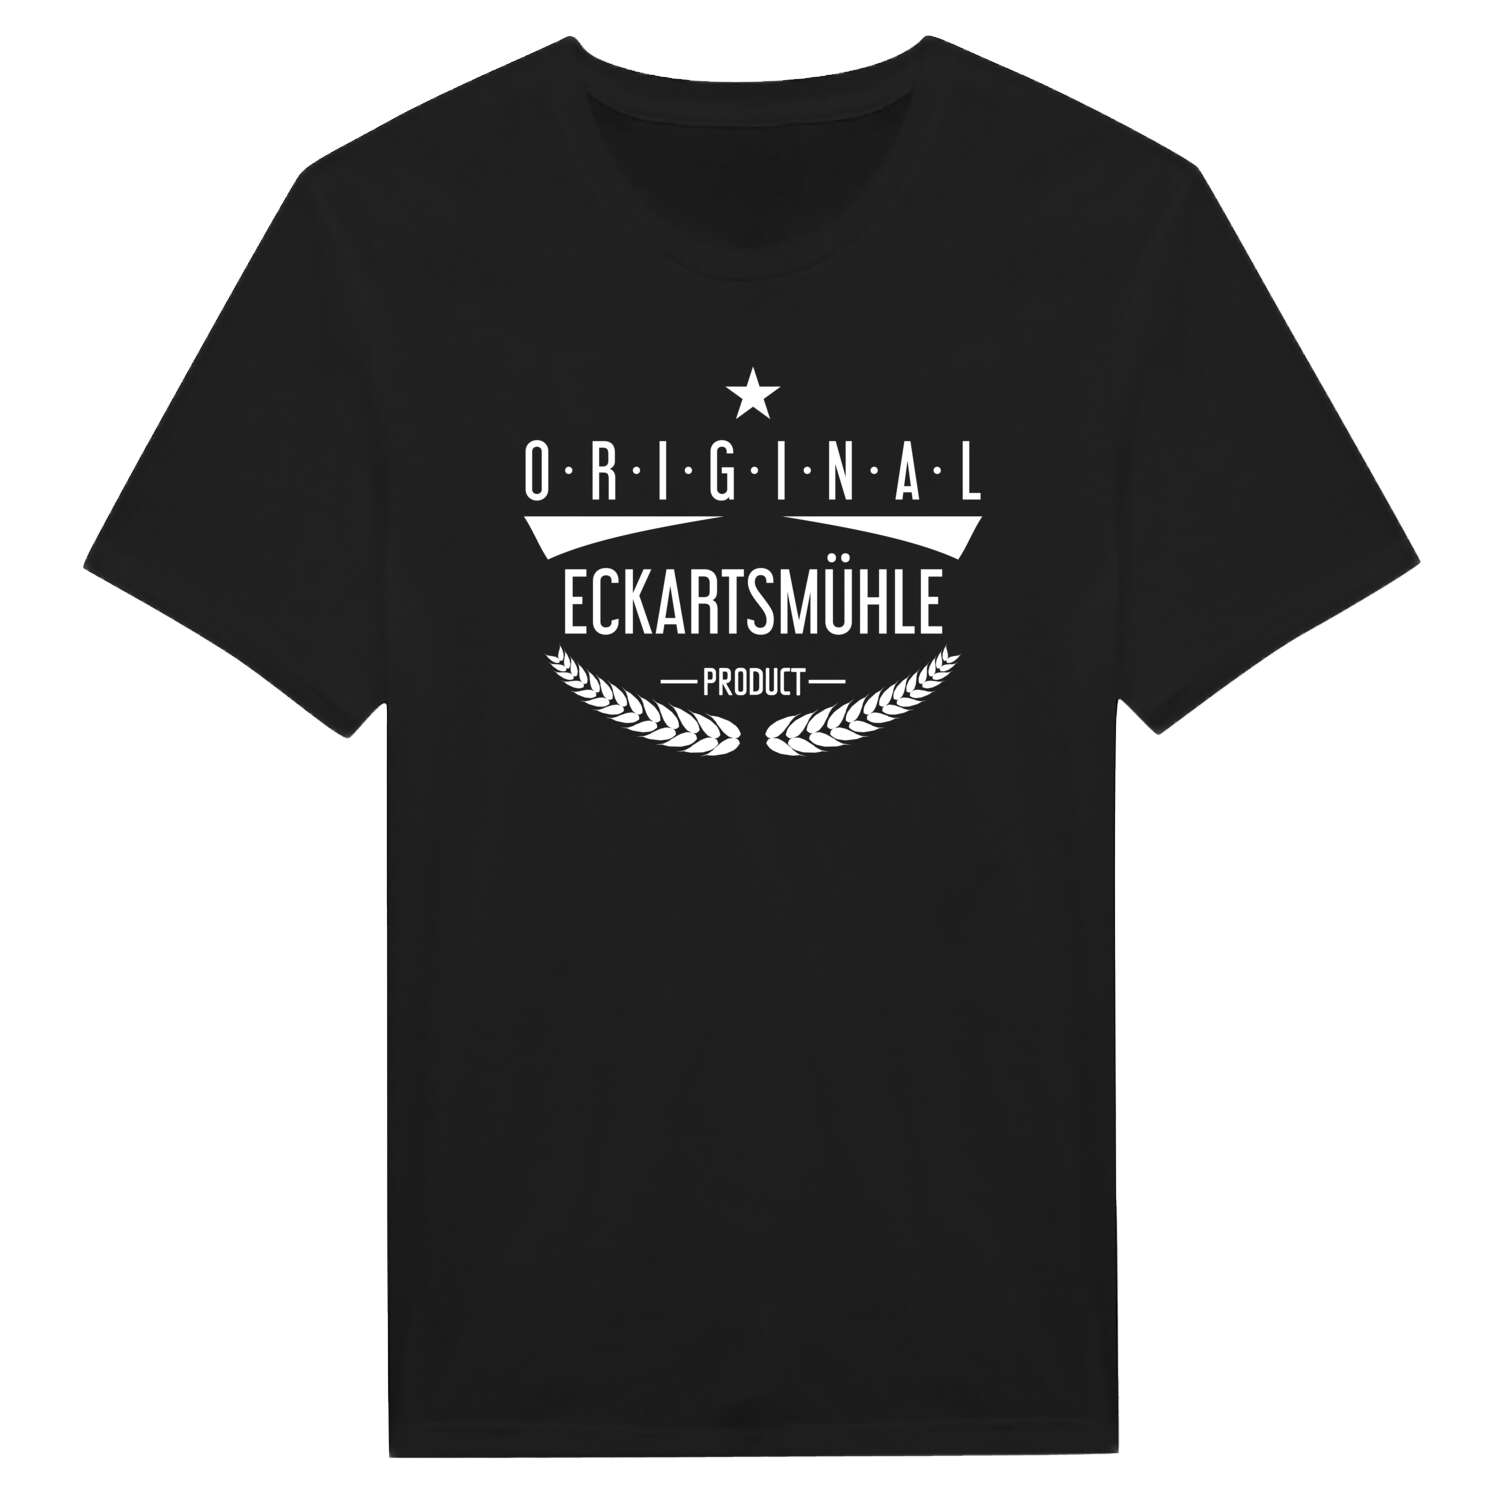 Eckartsmühle T-Shirt »Original Product«